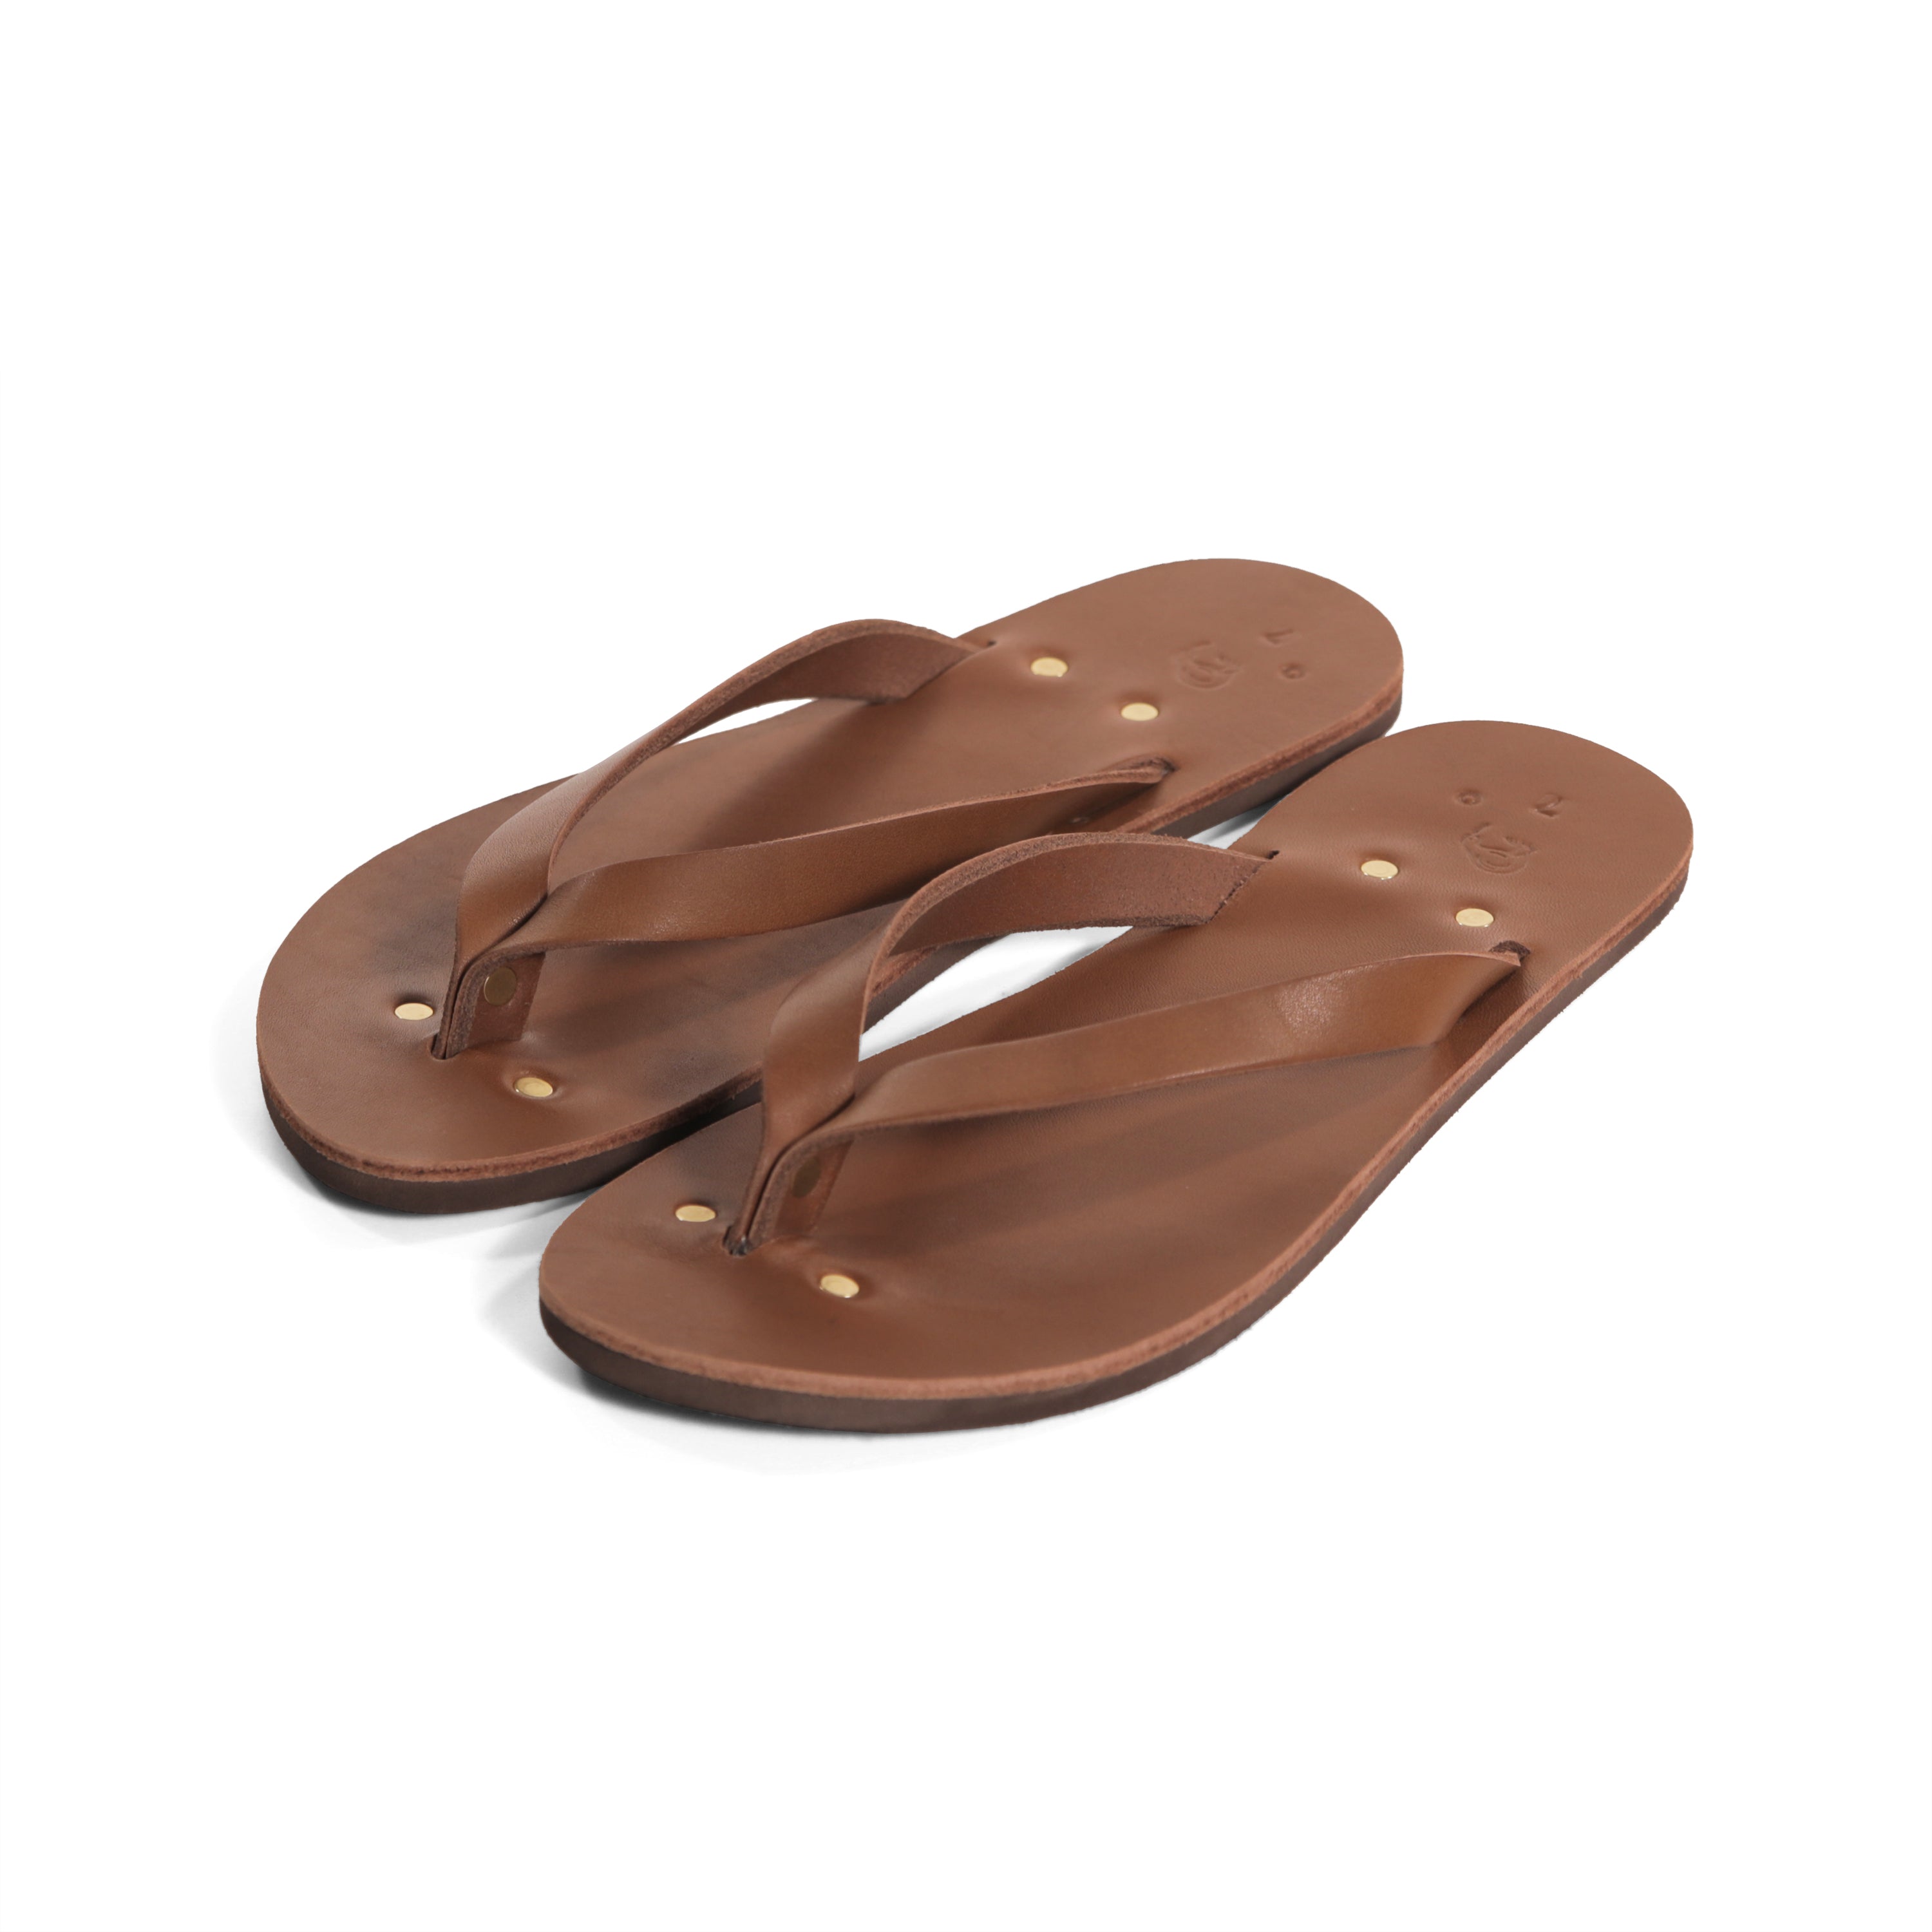 Kiwi Sandals